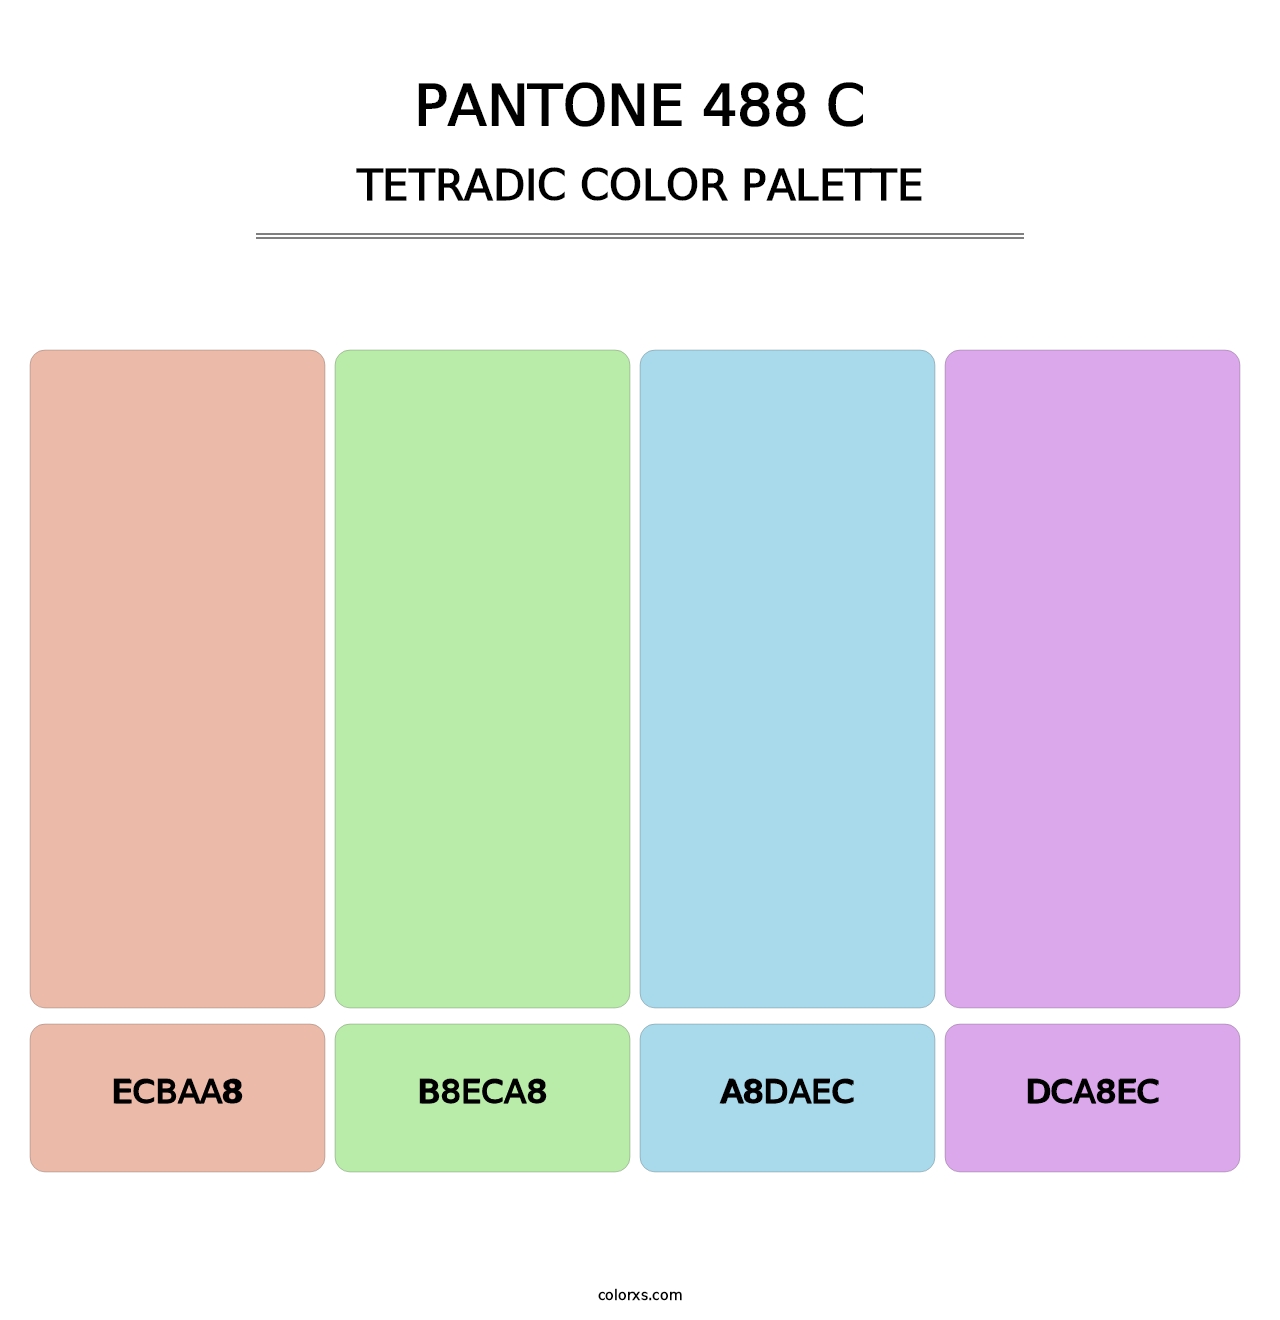 PANTONE 488 C - Tetradic Color Palette